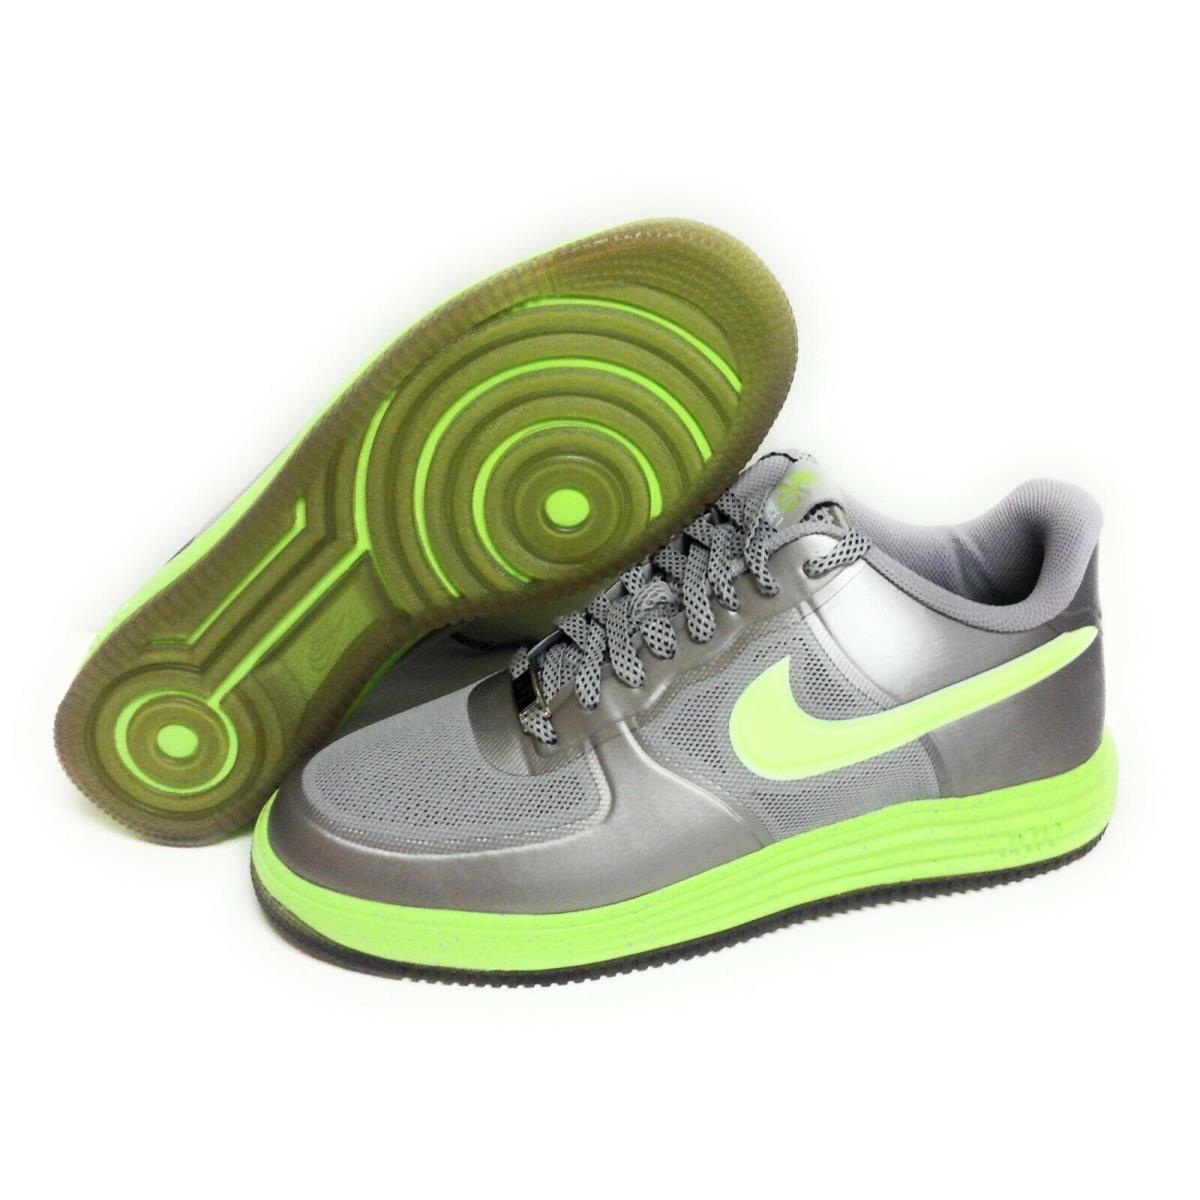 Mens Nike Lunar Force 1 Fuse 555027 002 Granite Grey Volt 2012 Sneakers Shoes